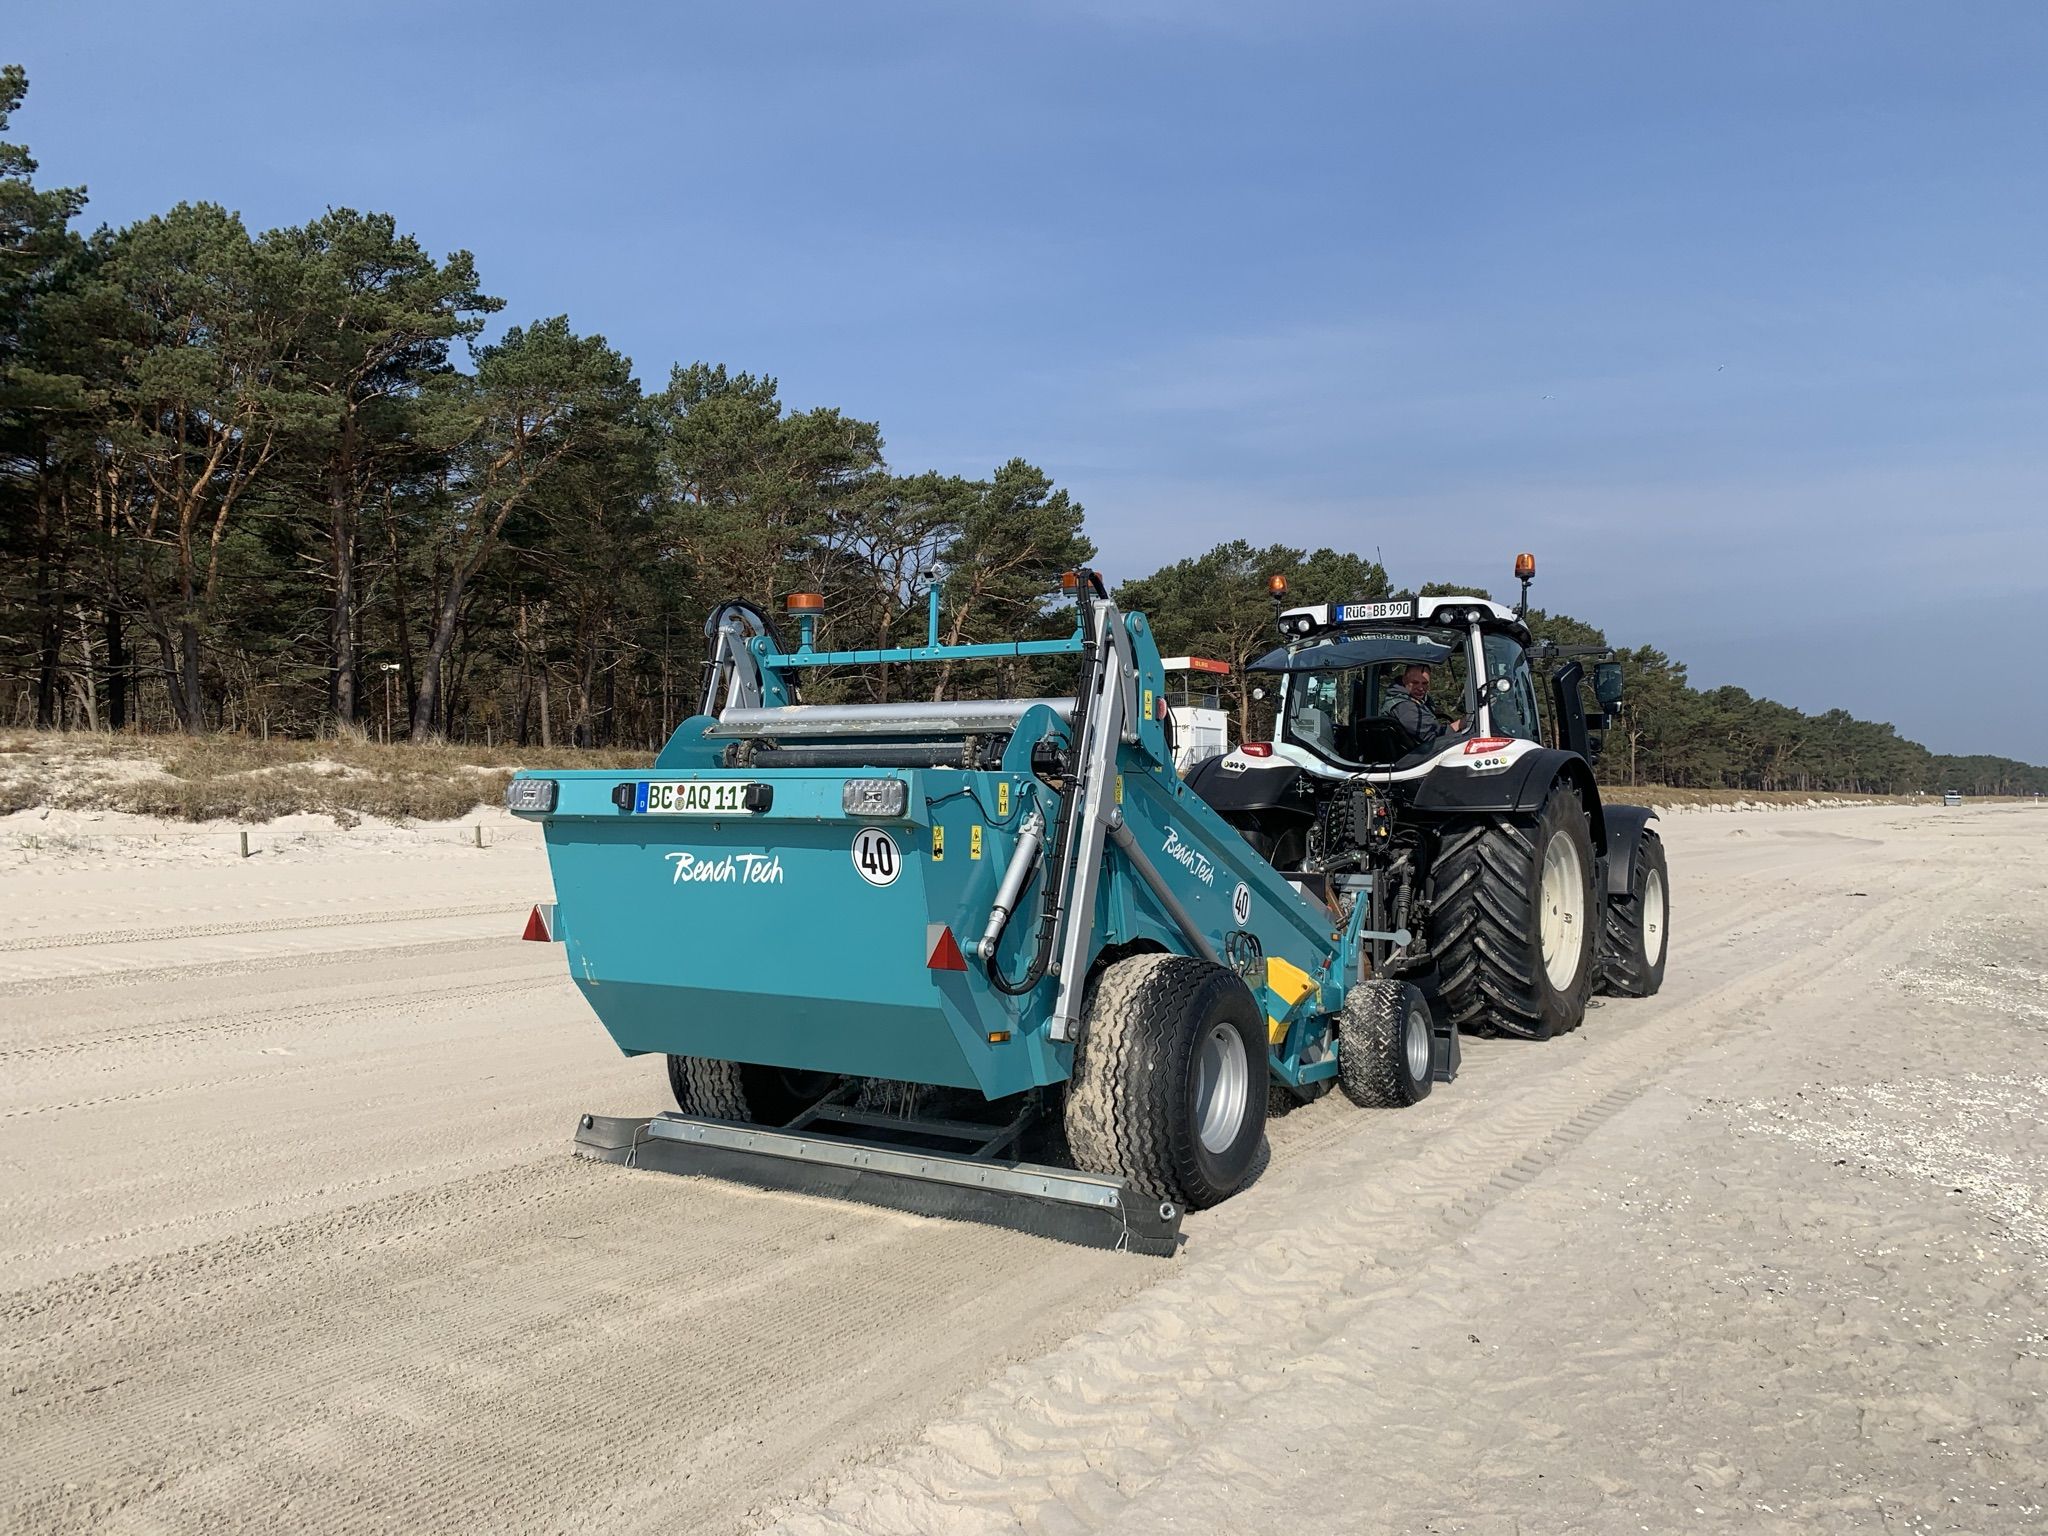 BeachTech 1500 cleans a large beach